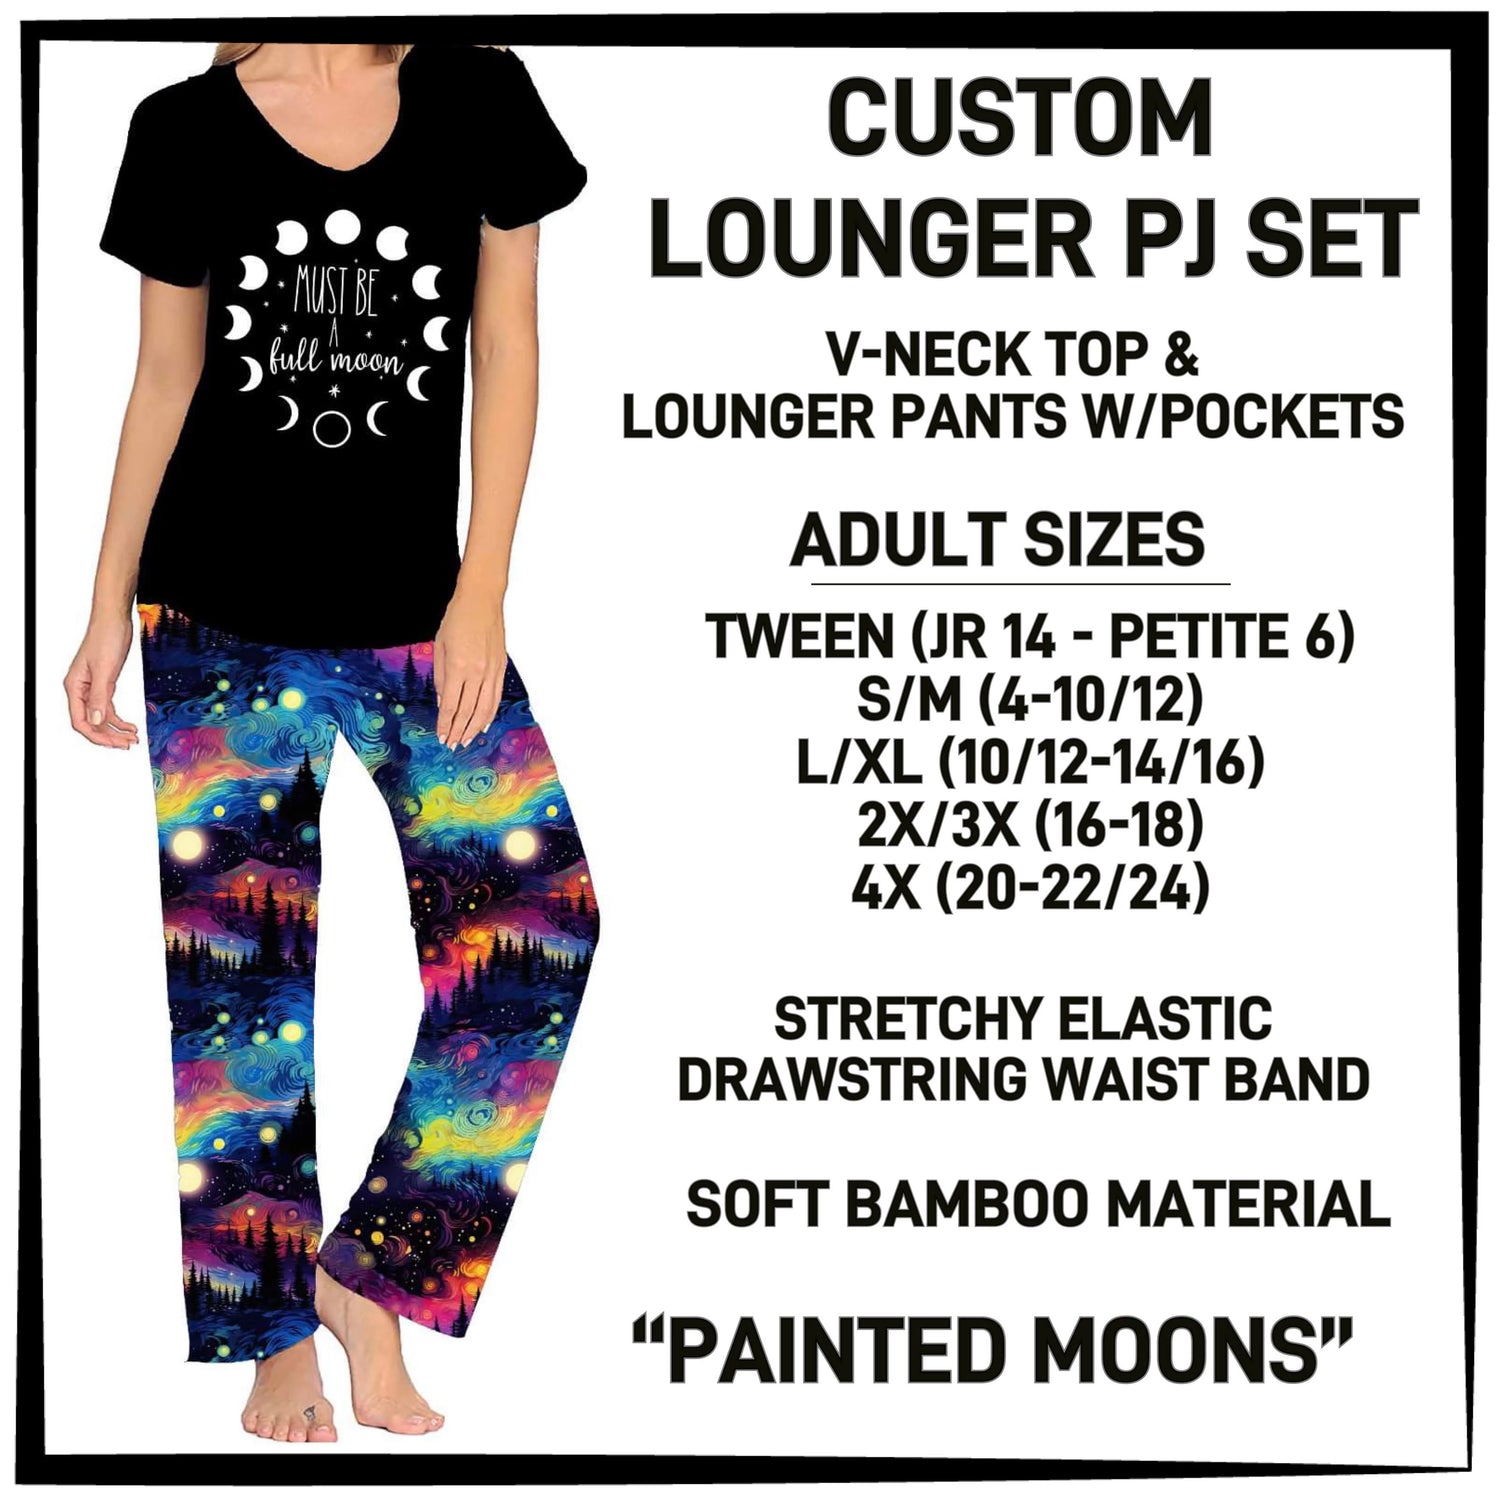 Lounger PJ Sets 2